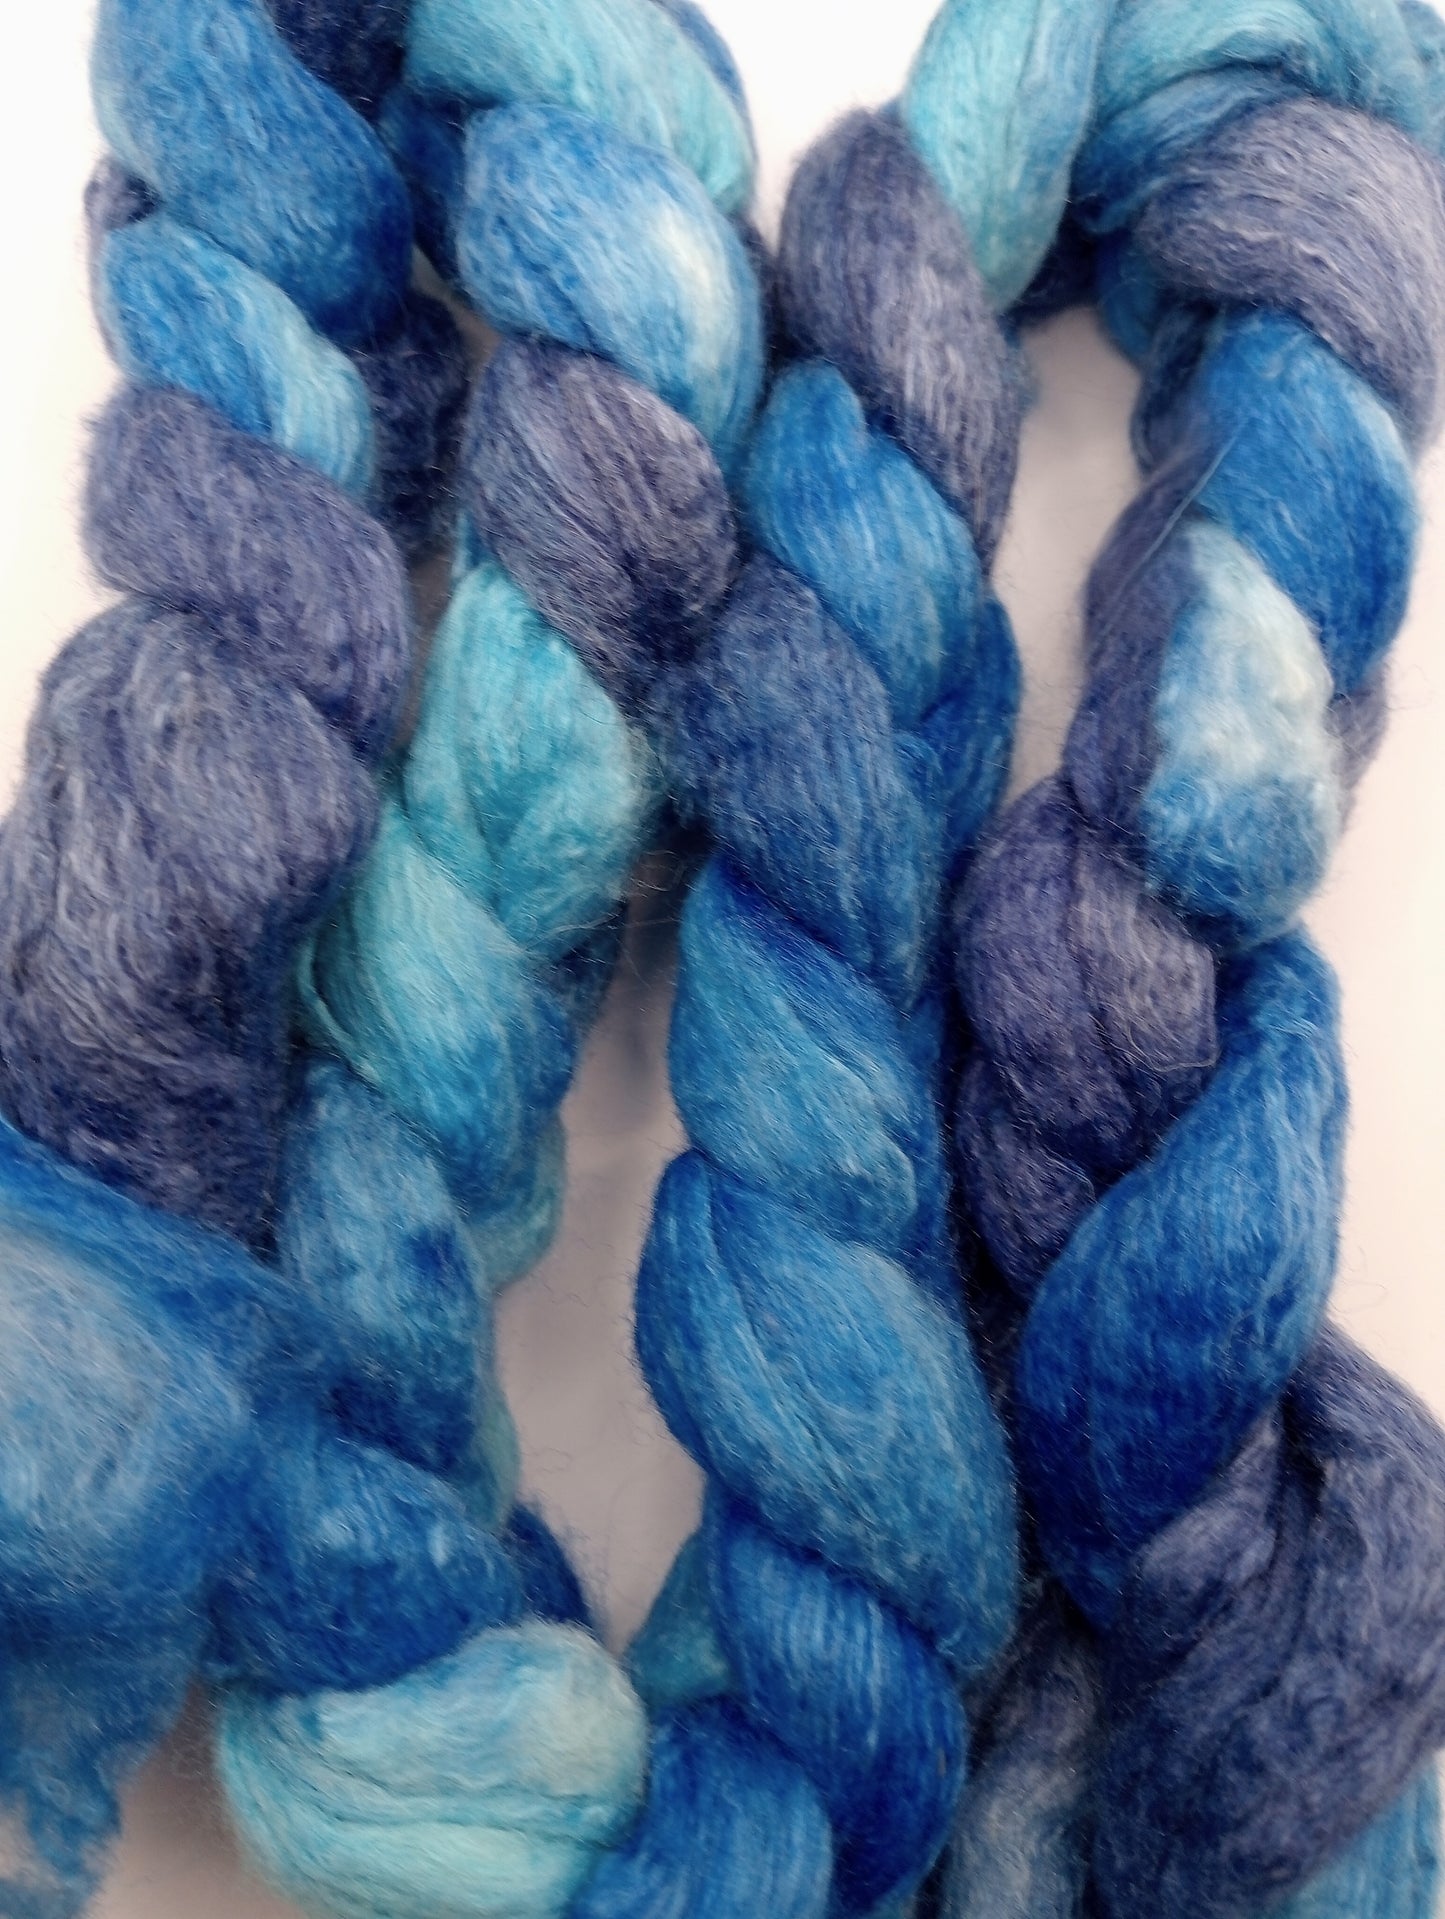 100G Merino/Silk hand dyed fibre combed top - "Royal"